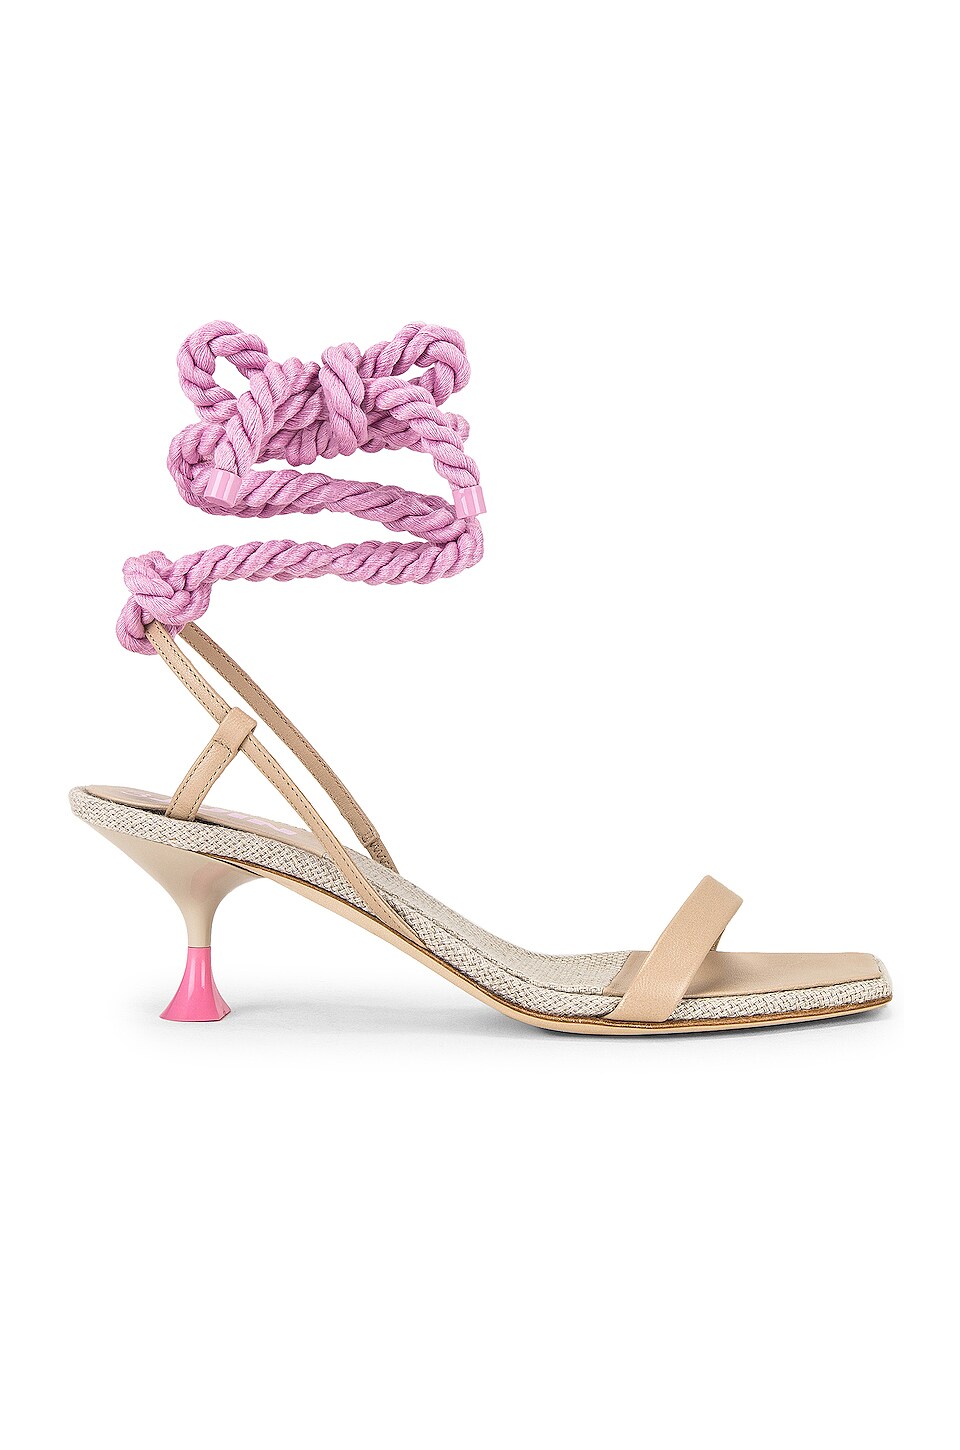 3JUIN Nevis Sandal in Rope Pink | REVOLVE